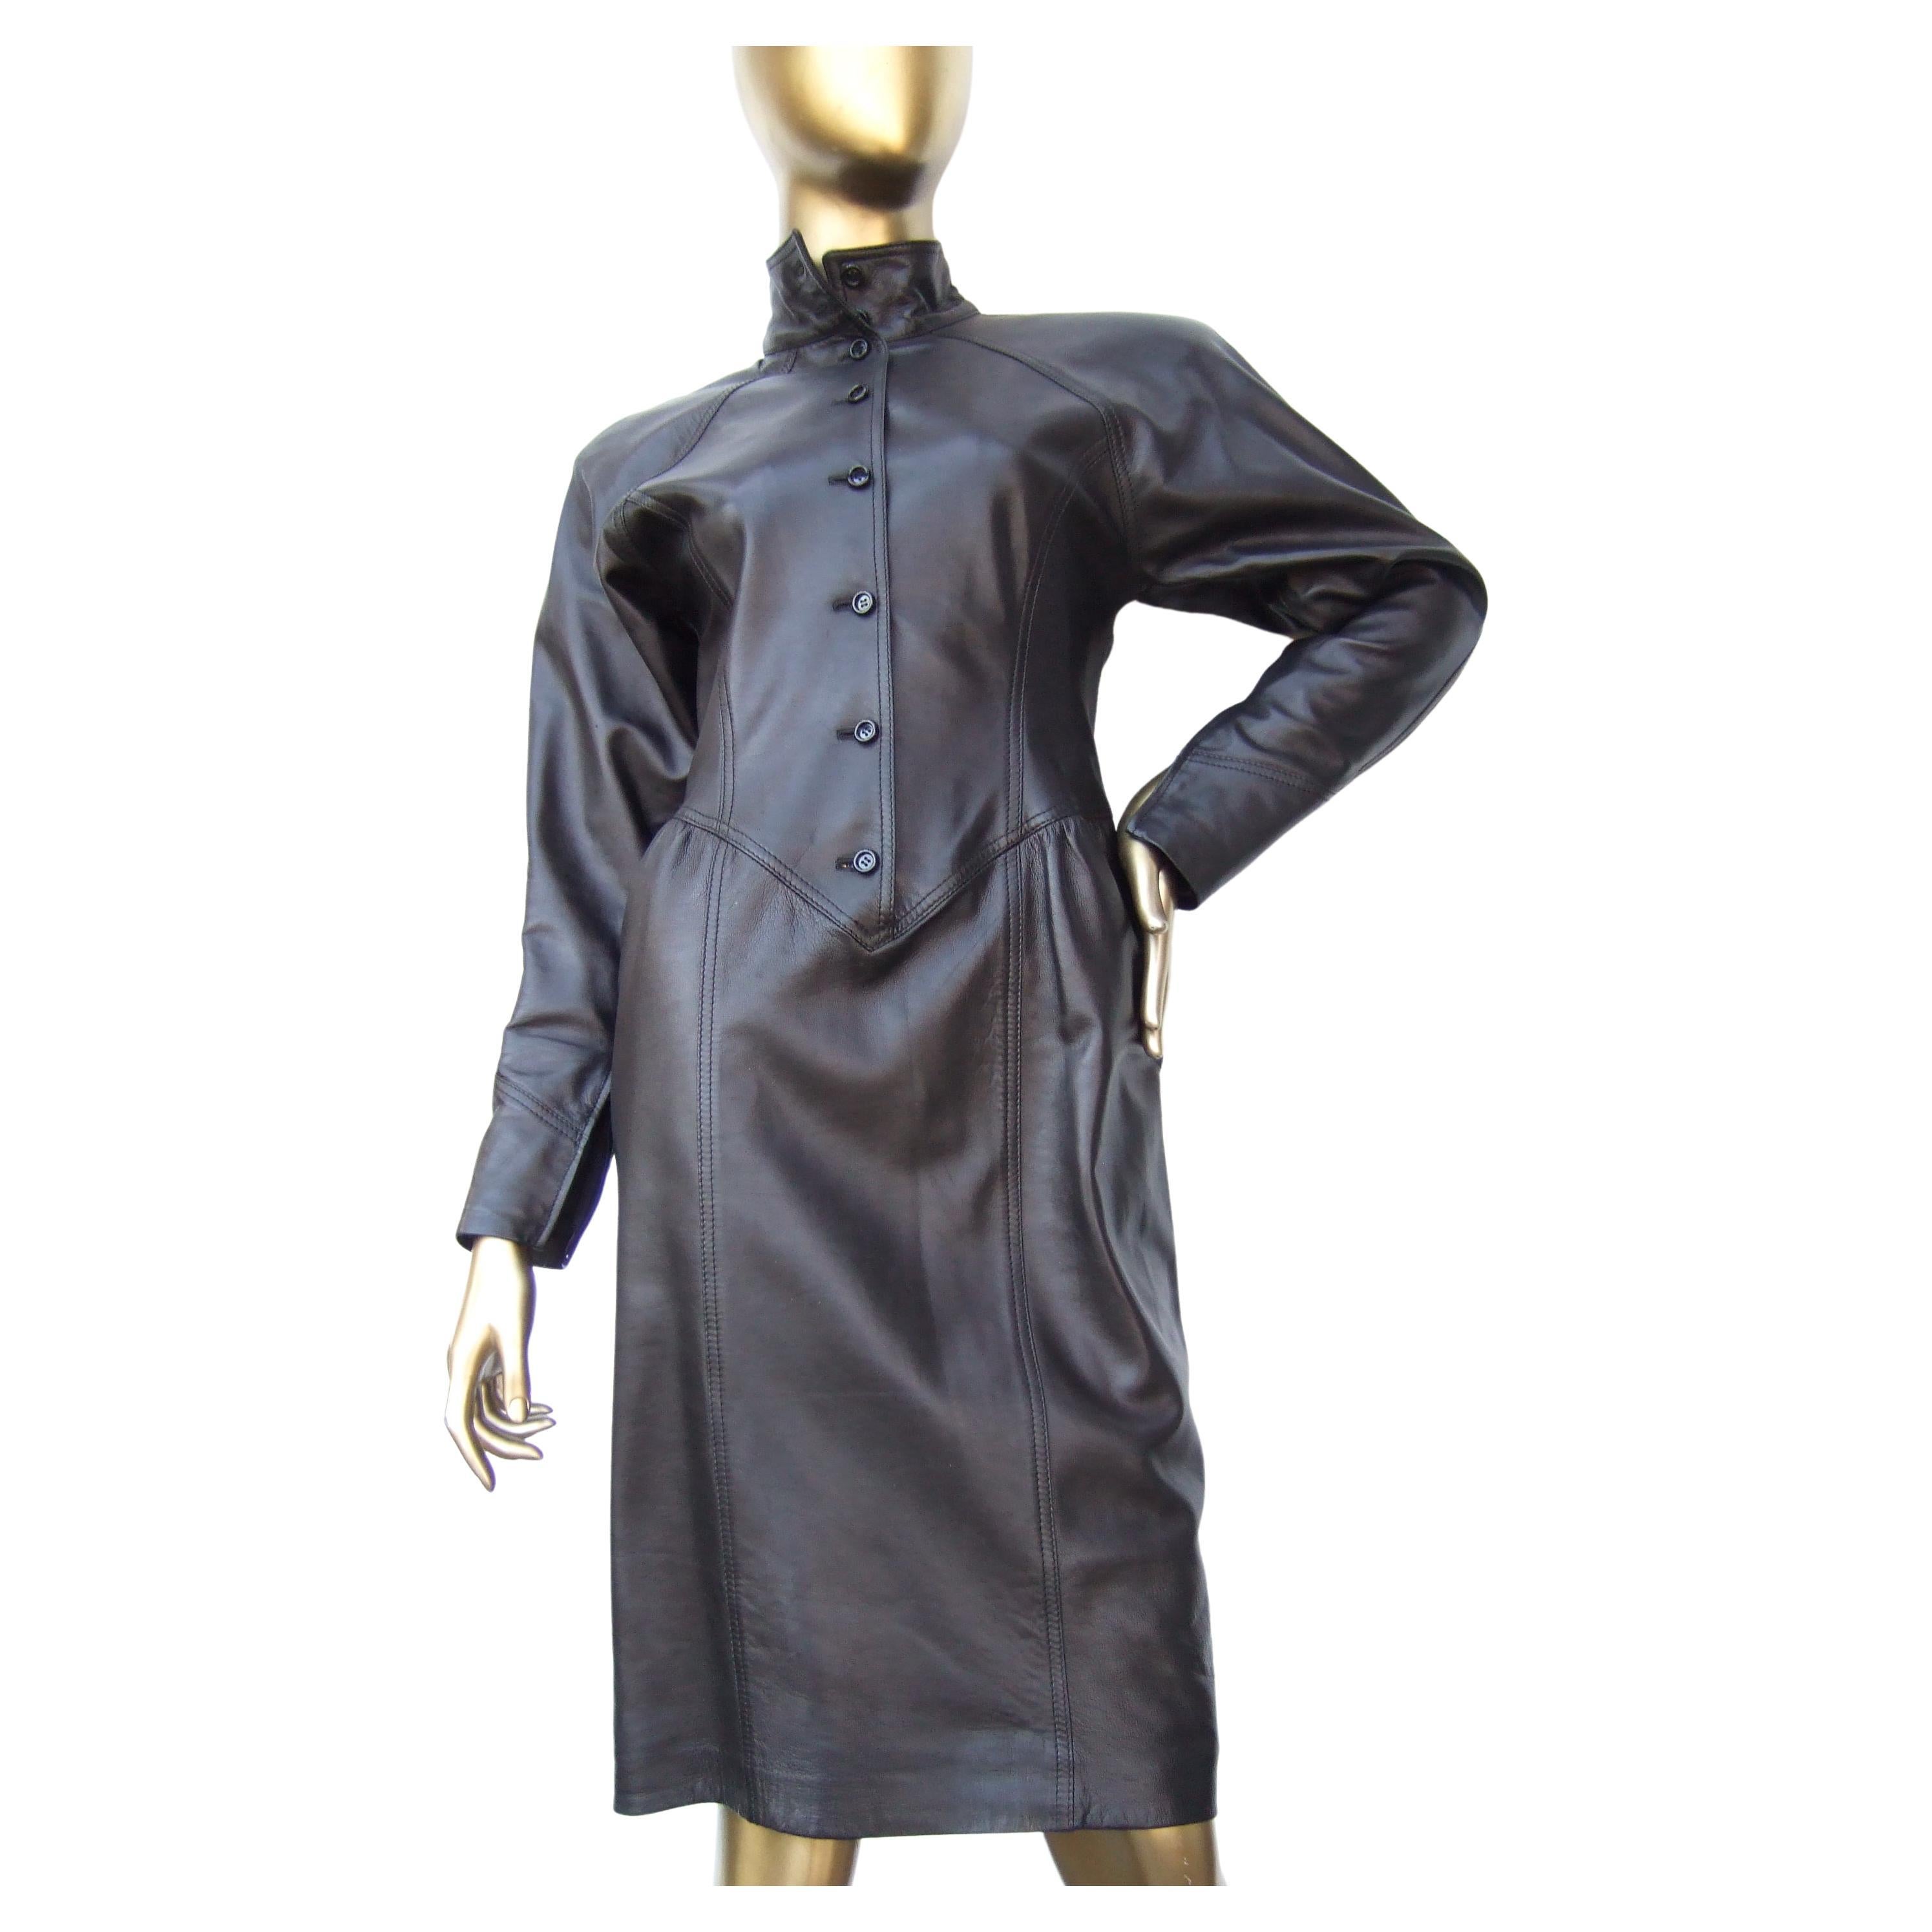 Emanuel Ungaro Paris Avant Garde Edgy Brown Leather Dress Made in Italy c 1980s en vente